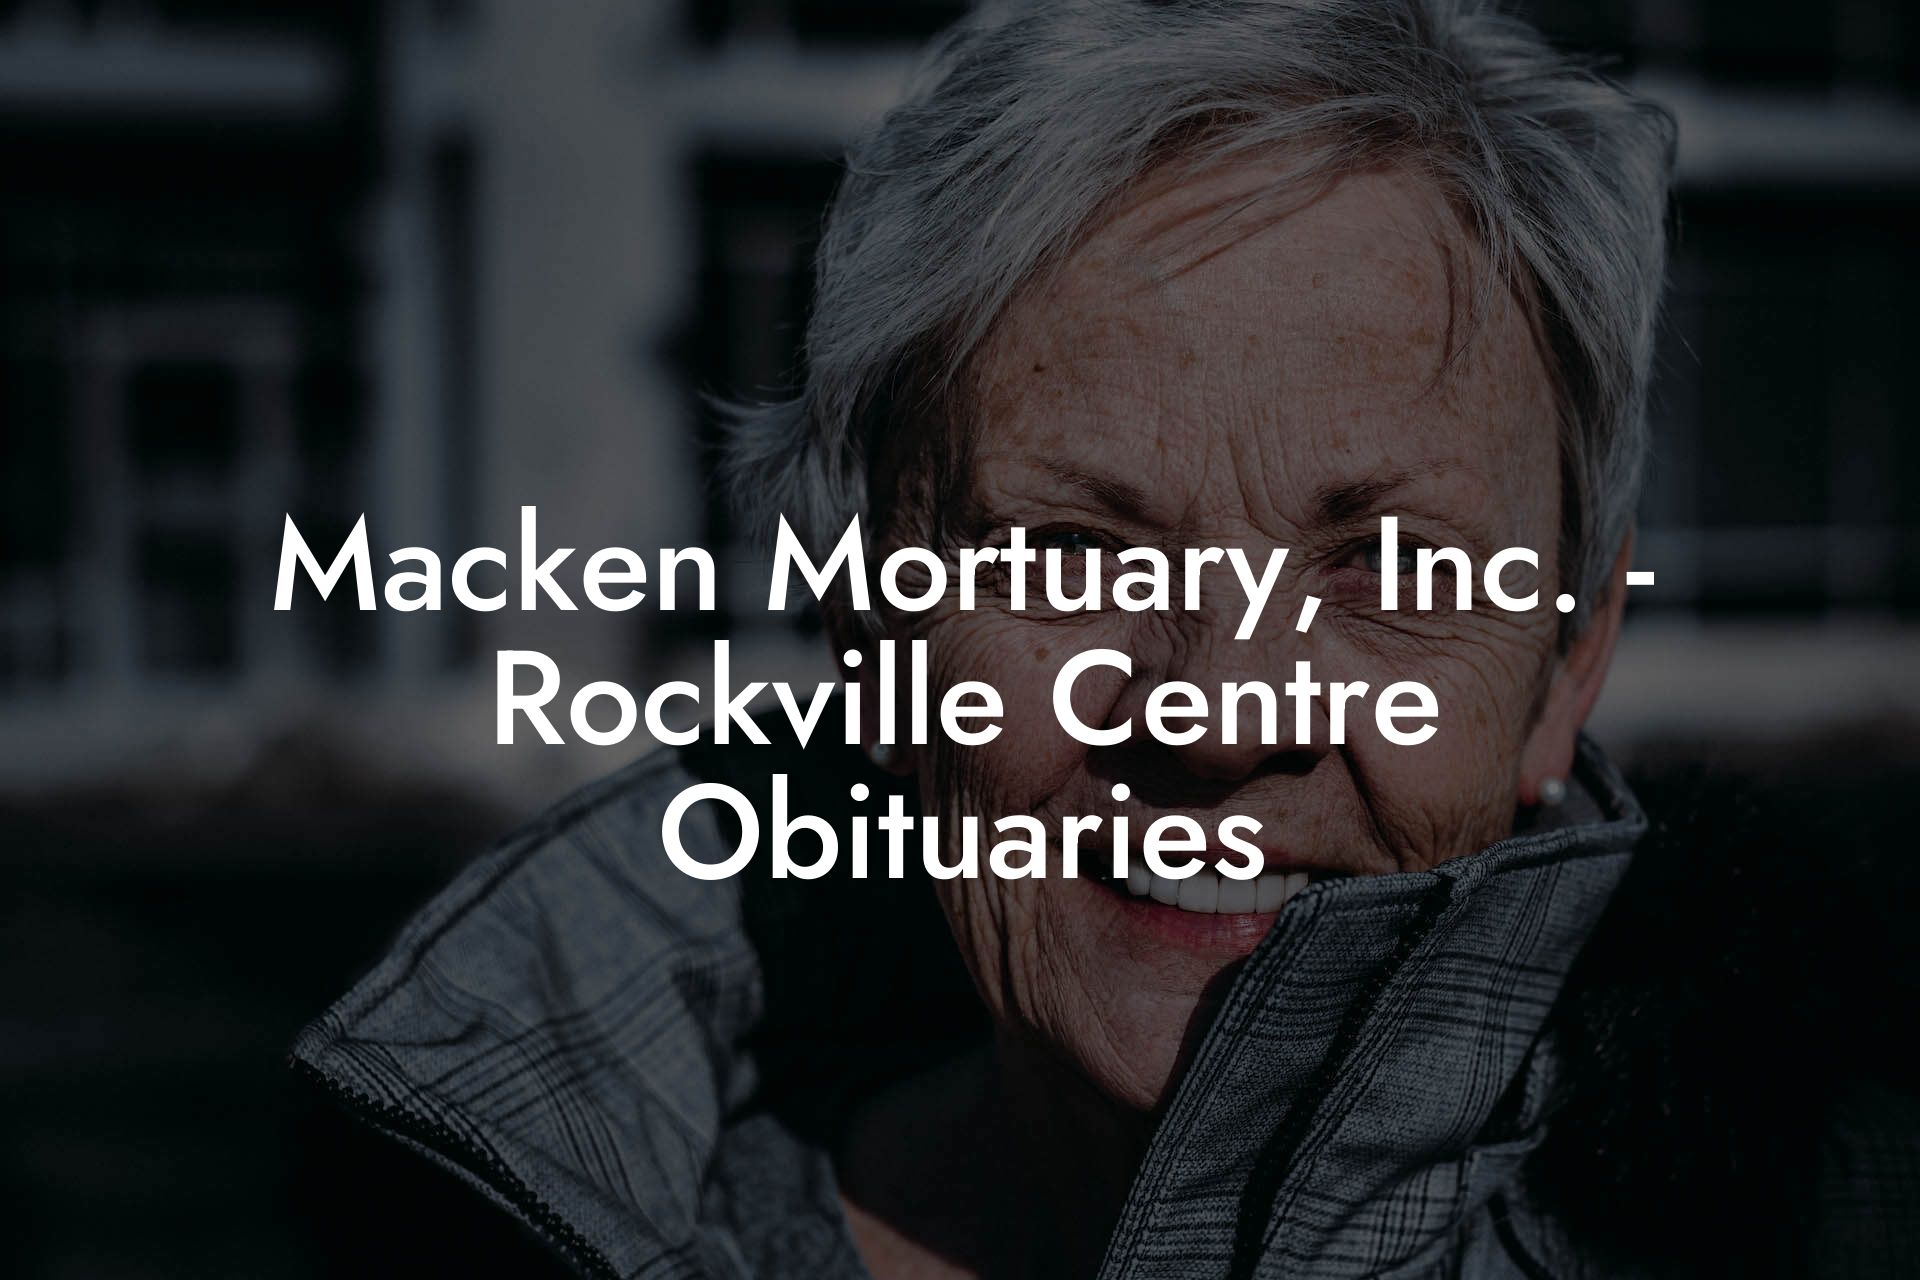 Macken Mortuary, Inc. - Rockville Centre Obituaries